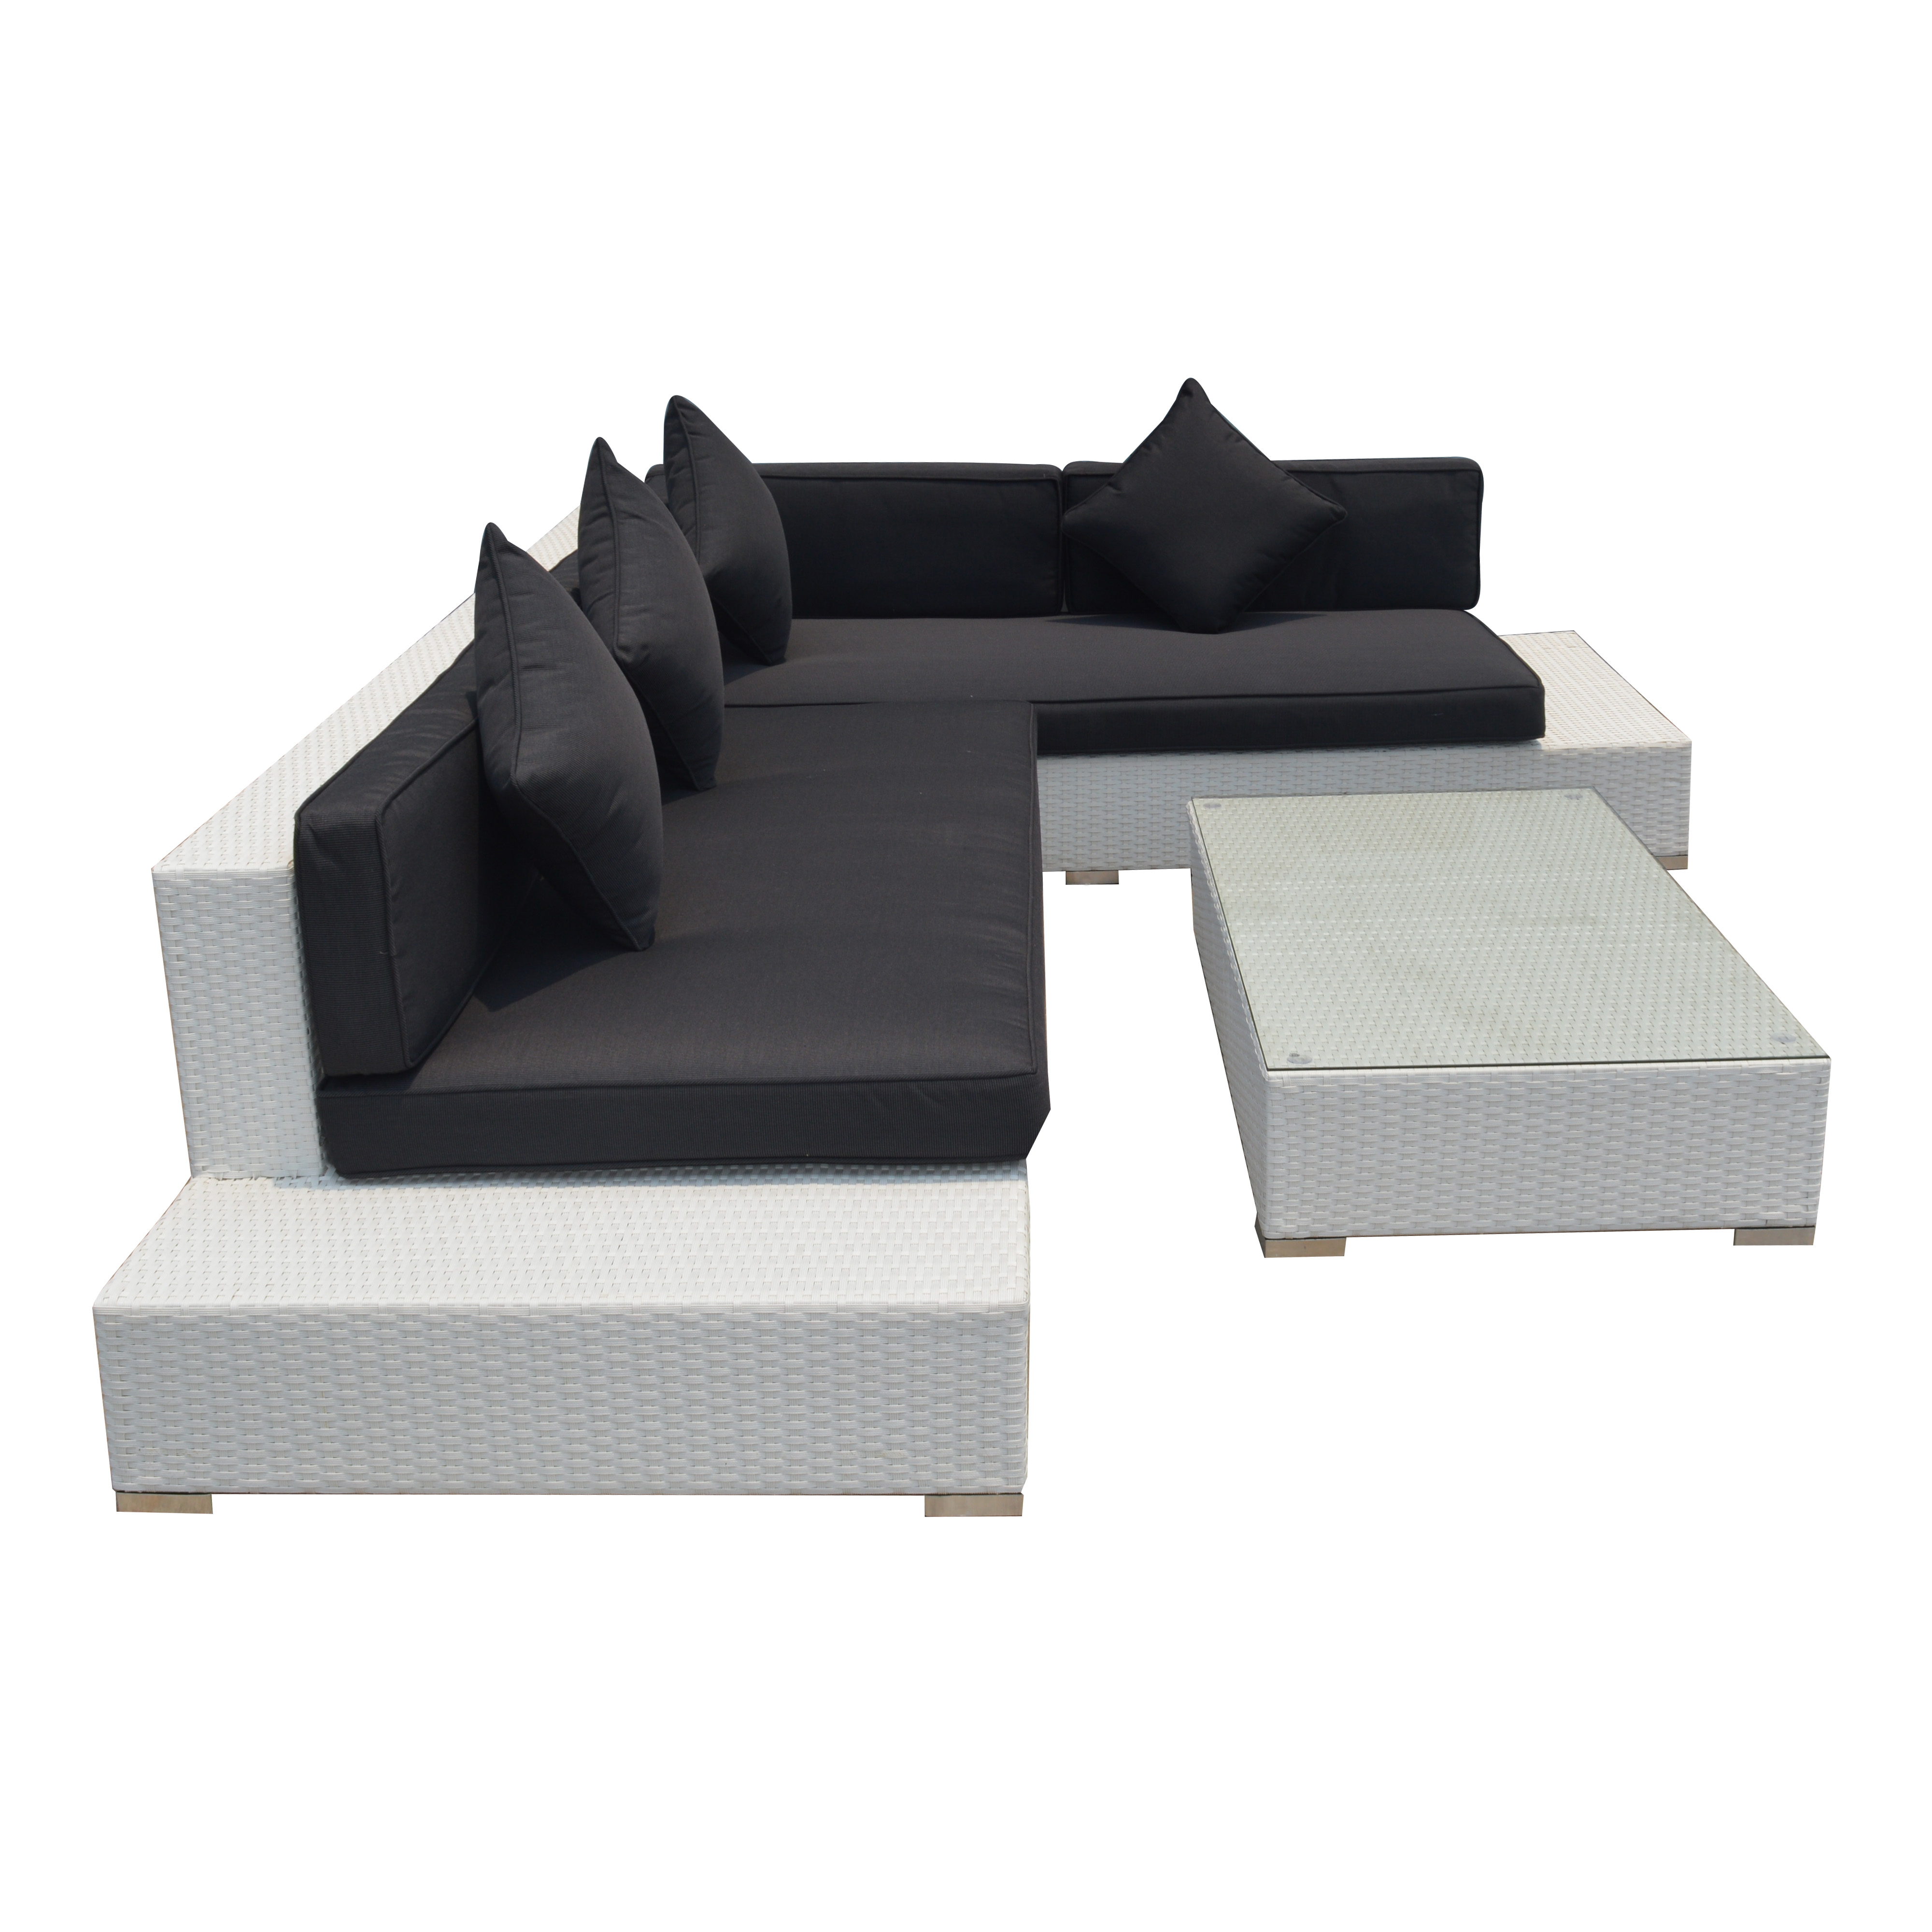 The use of rattan sofa